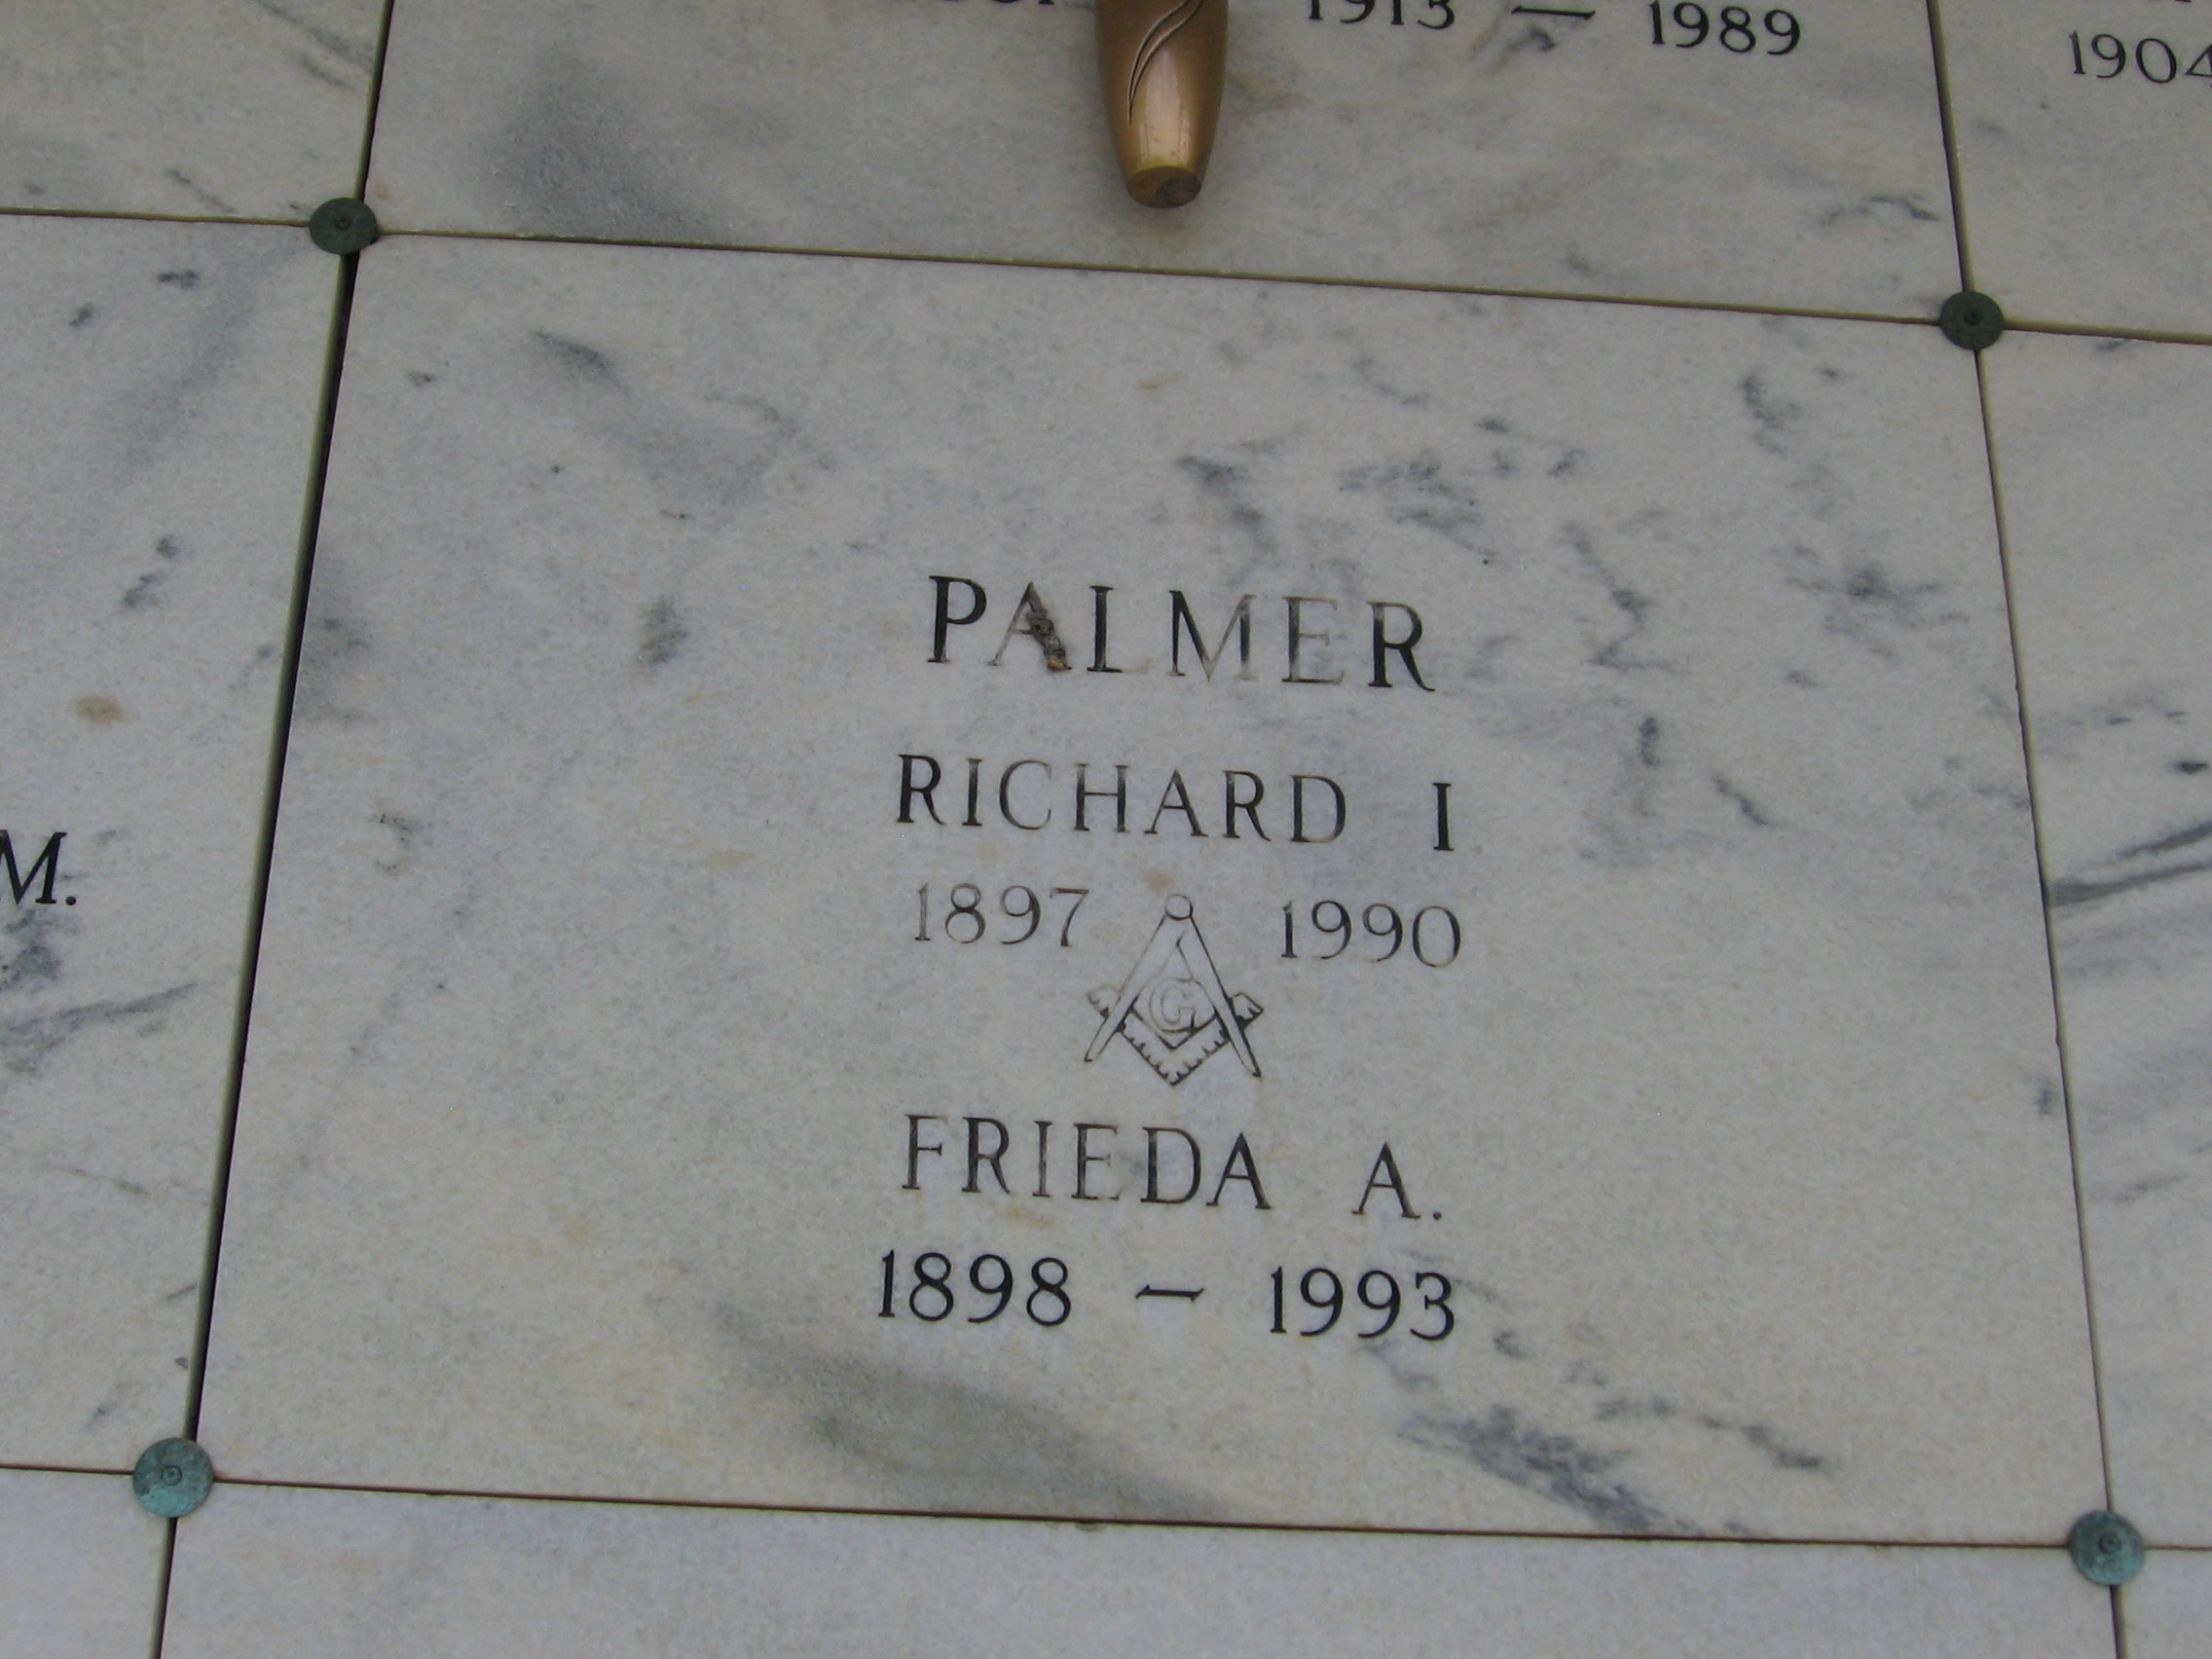 Richard I Palmer